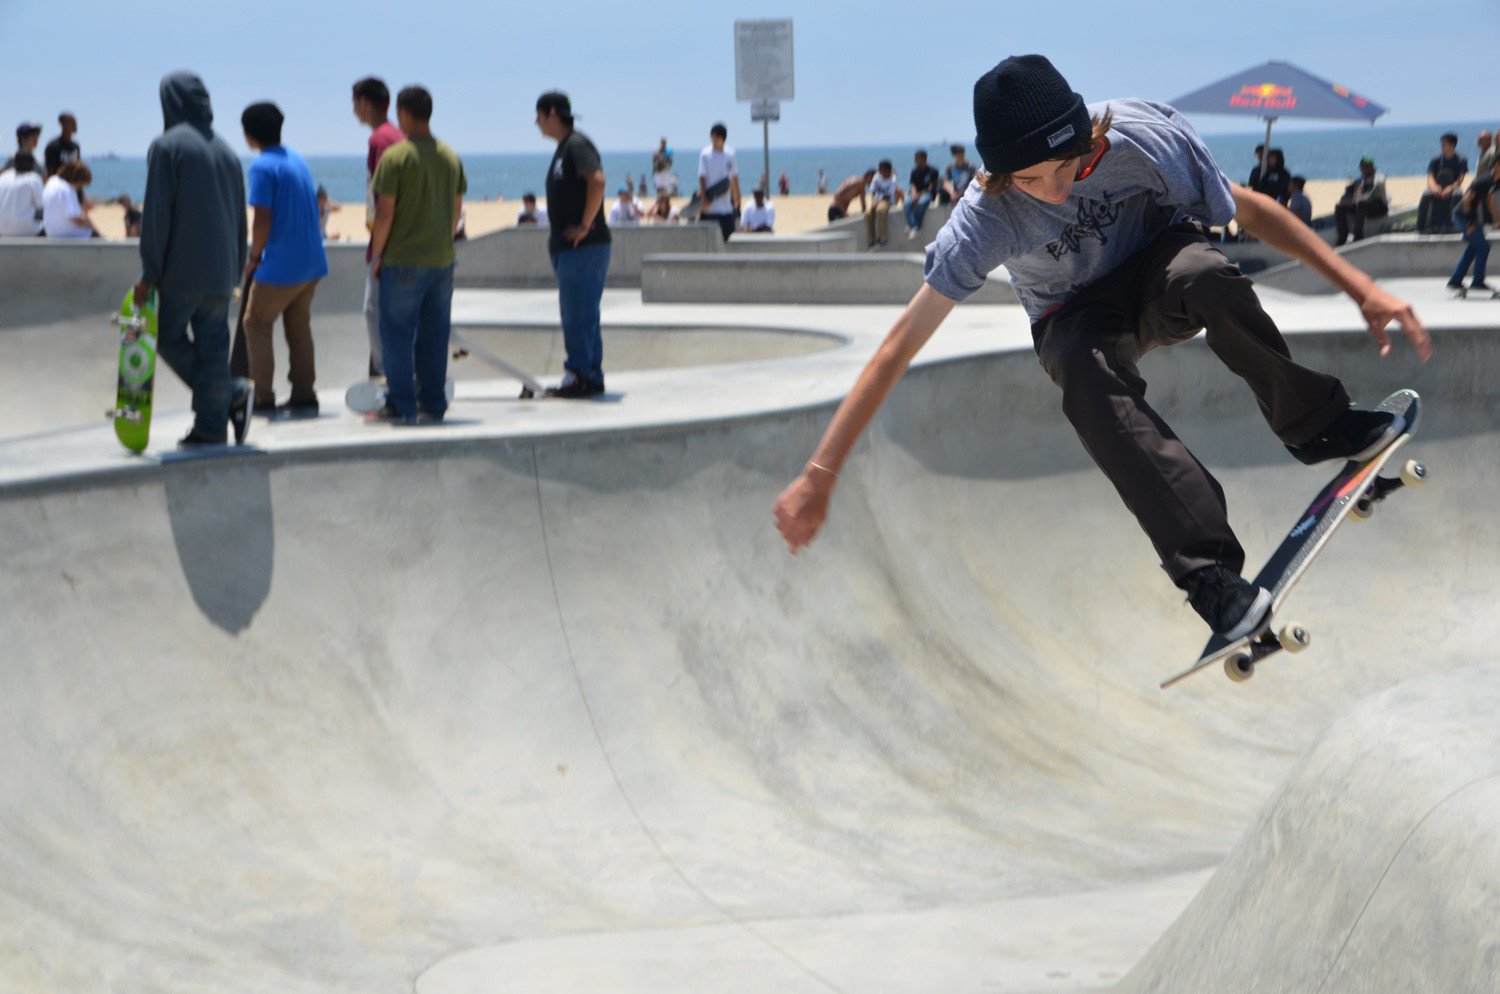 The Skate Park at Venice Beach, California